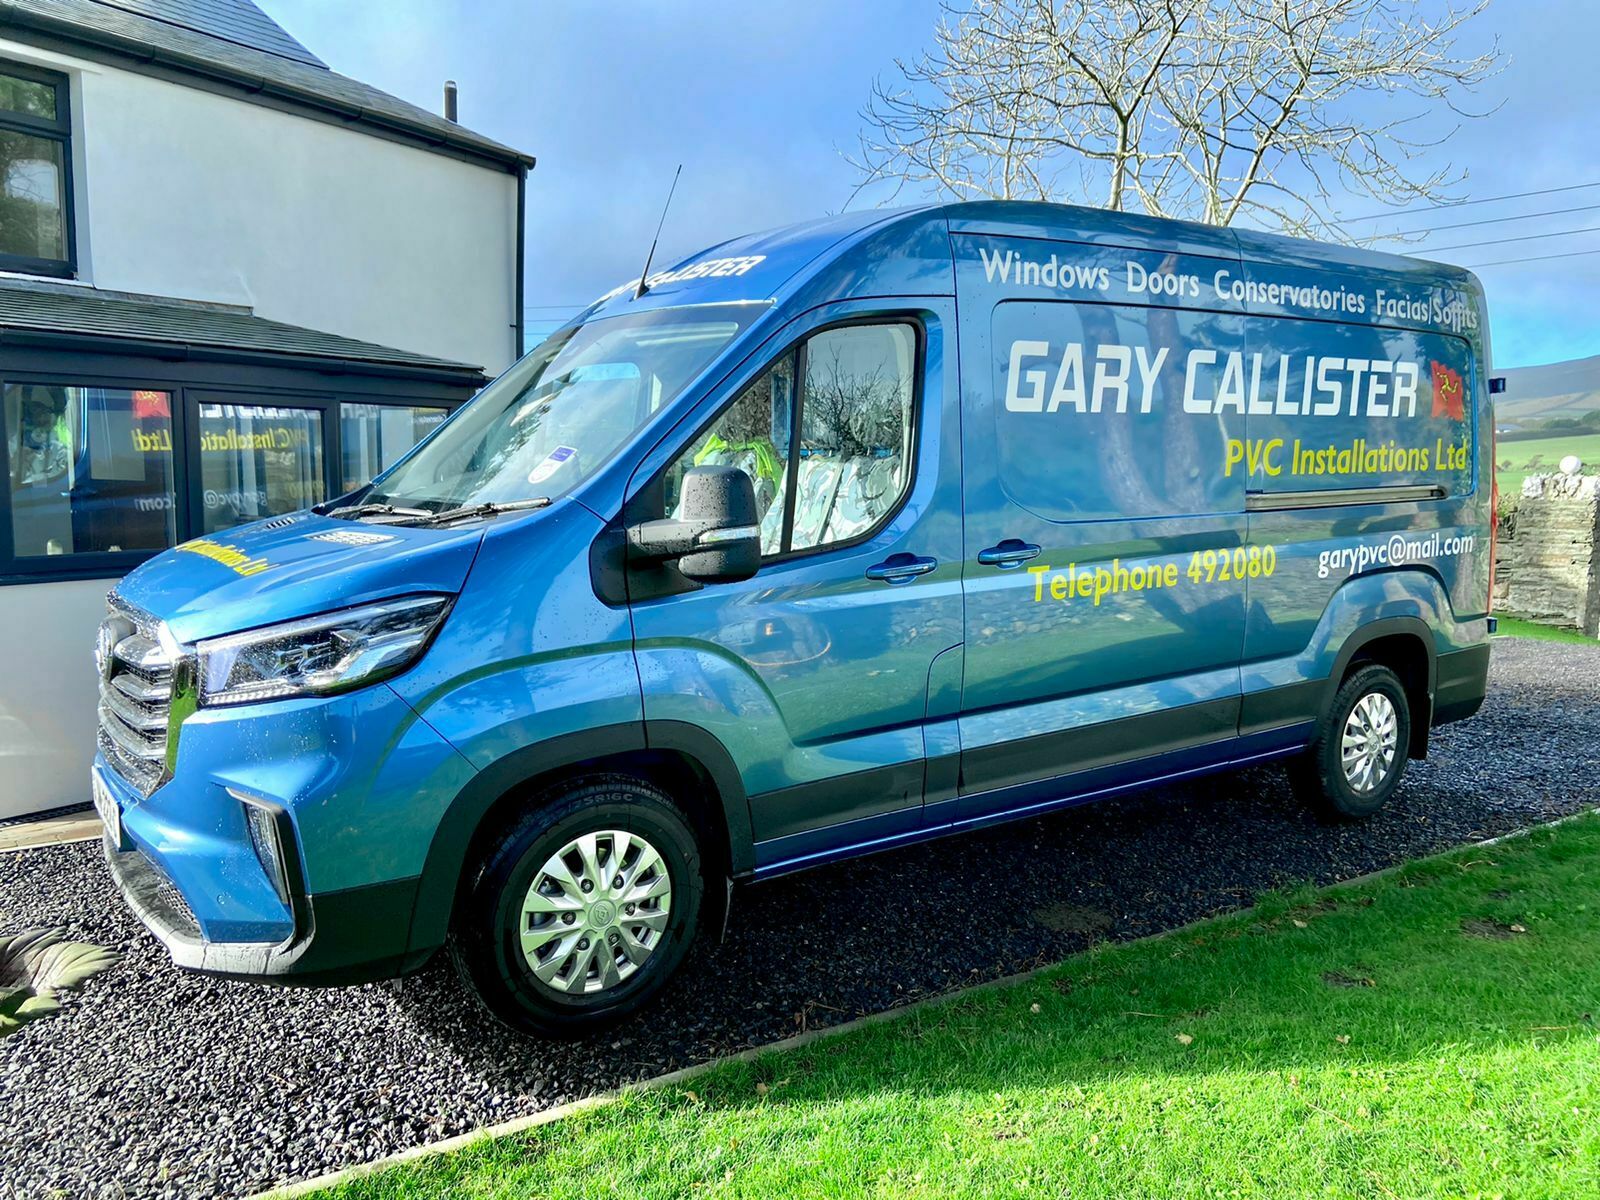 Gary Callister PVC Installation Ltd